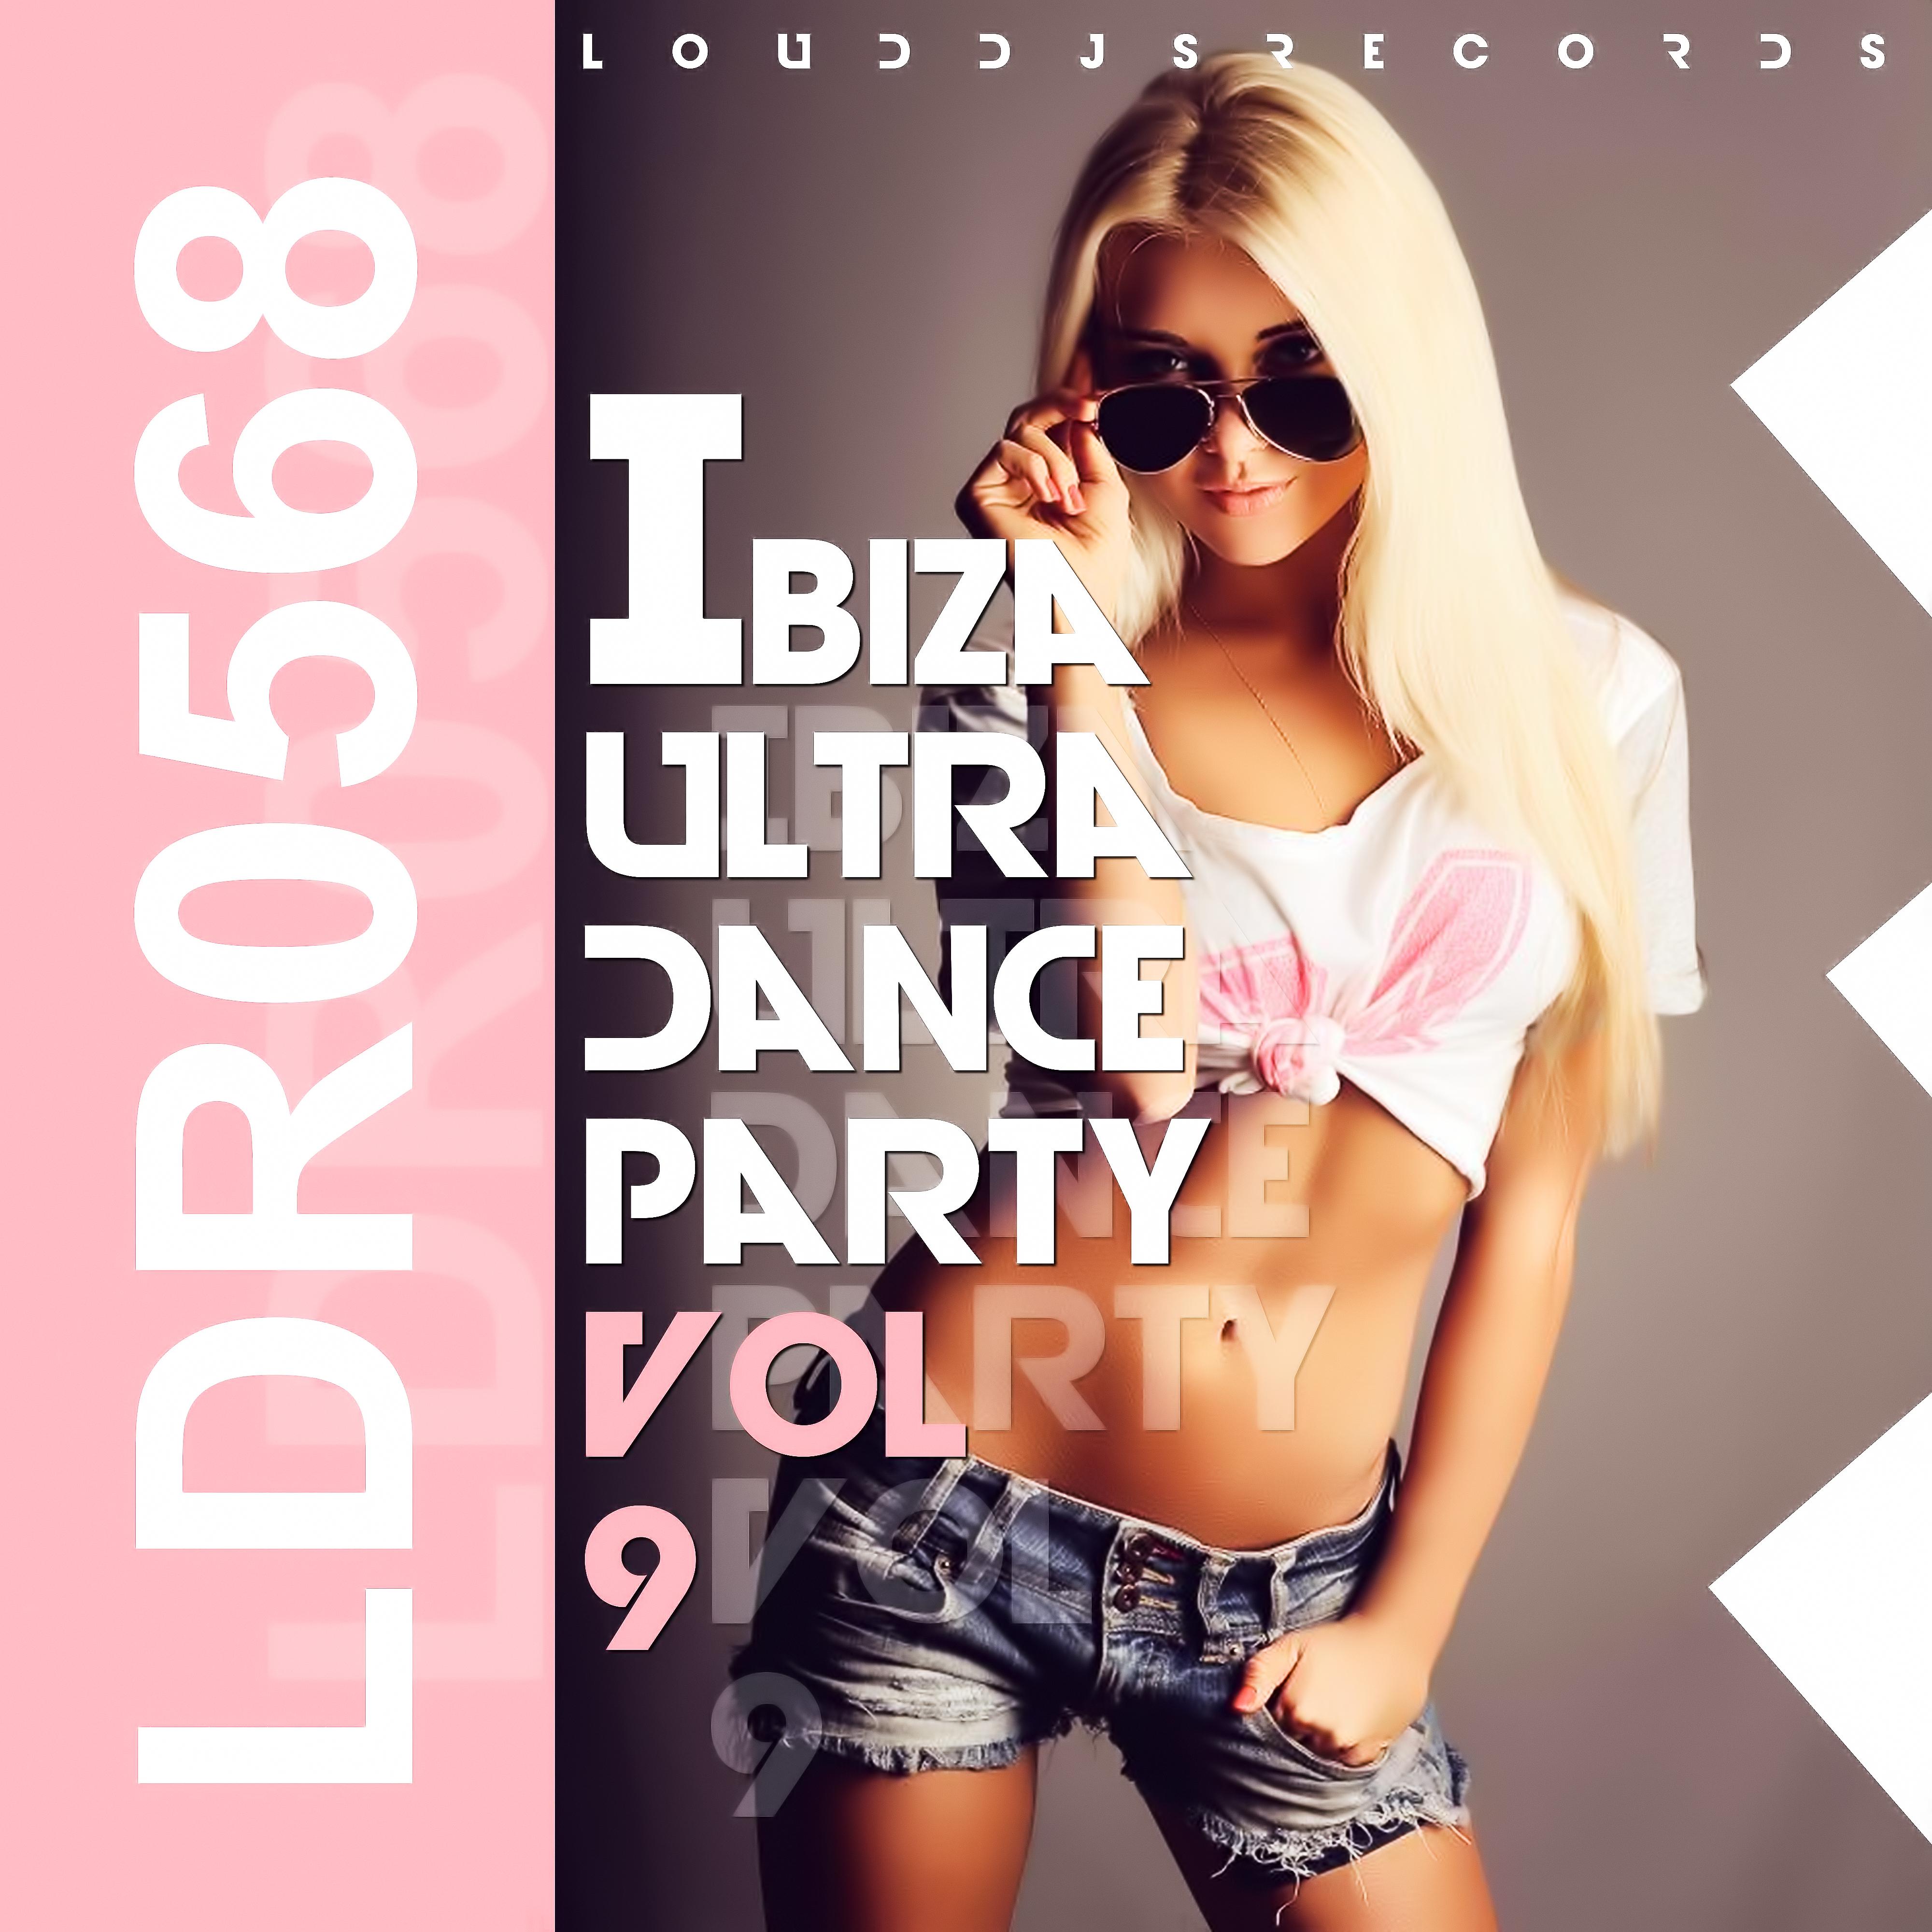 Ibiza Ultra Dance Party, Vol. 9